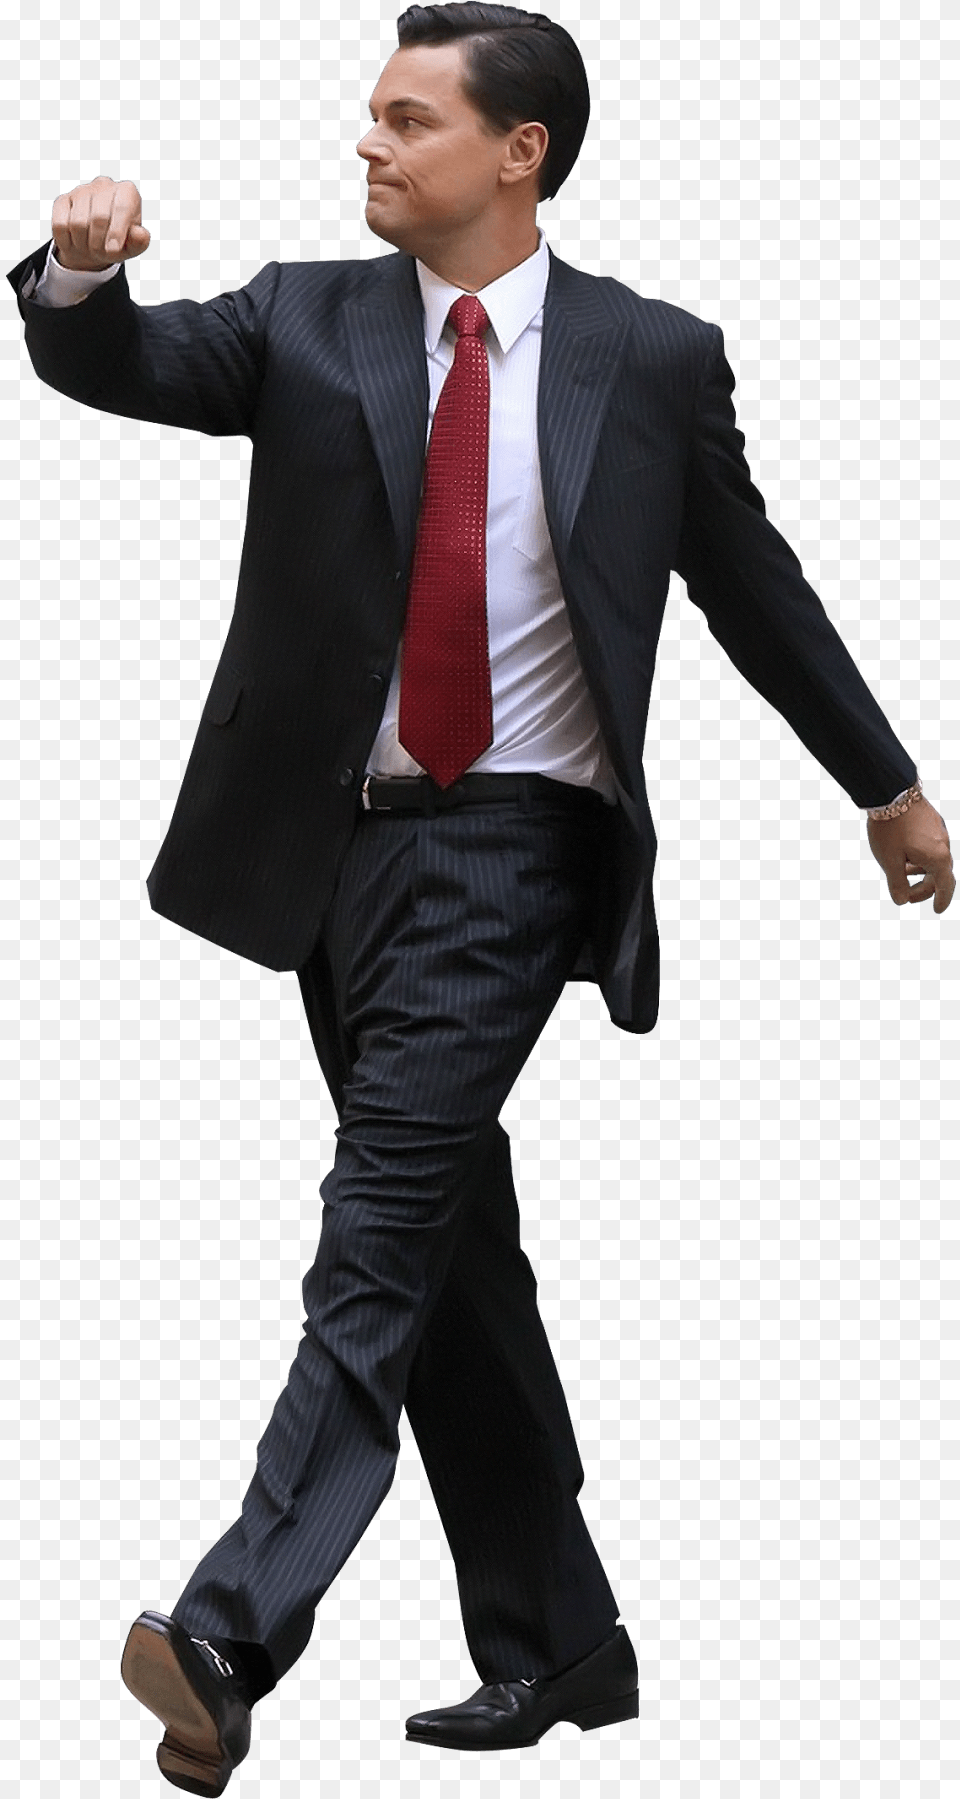 Walking Download Leonardo Dicaprio Background, Accessories, Tie, Suit, Jacket Free Transparent Png